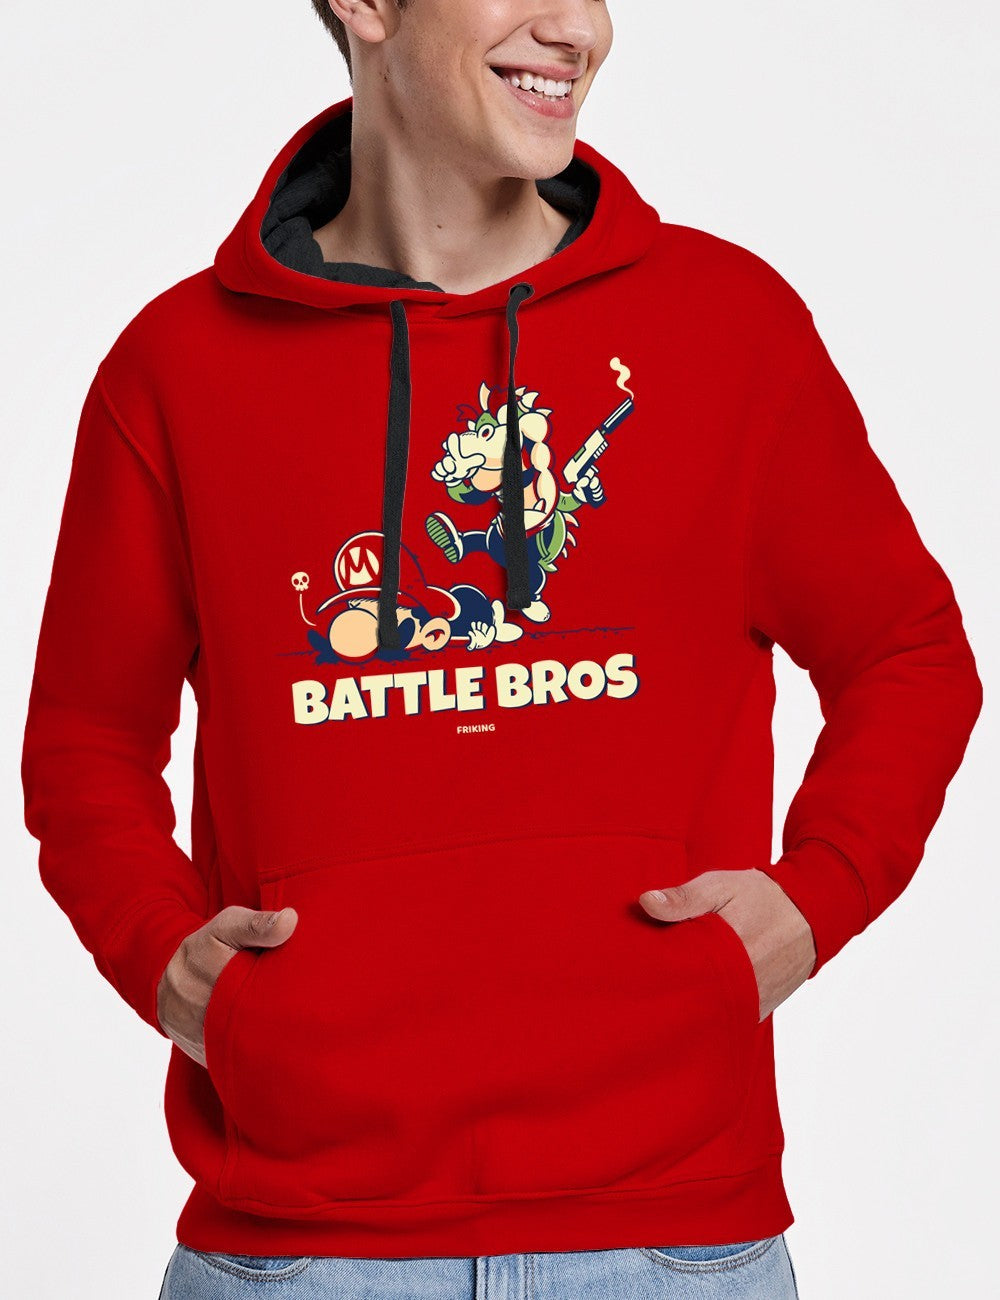  Battle Bros 